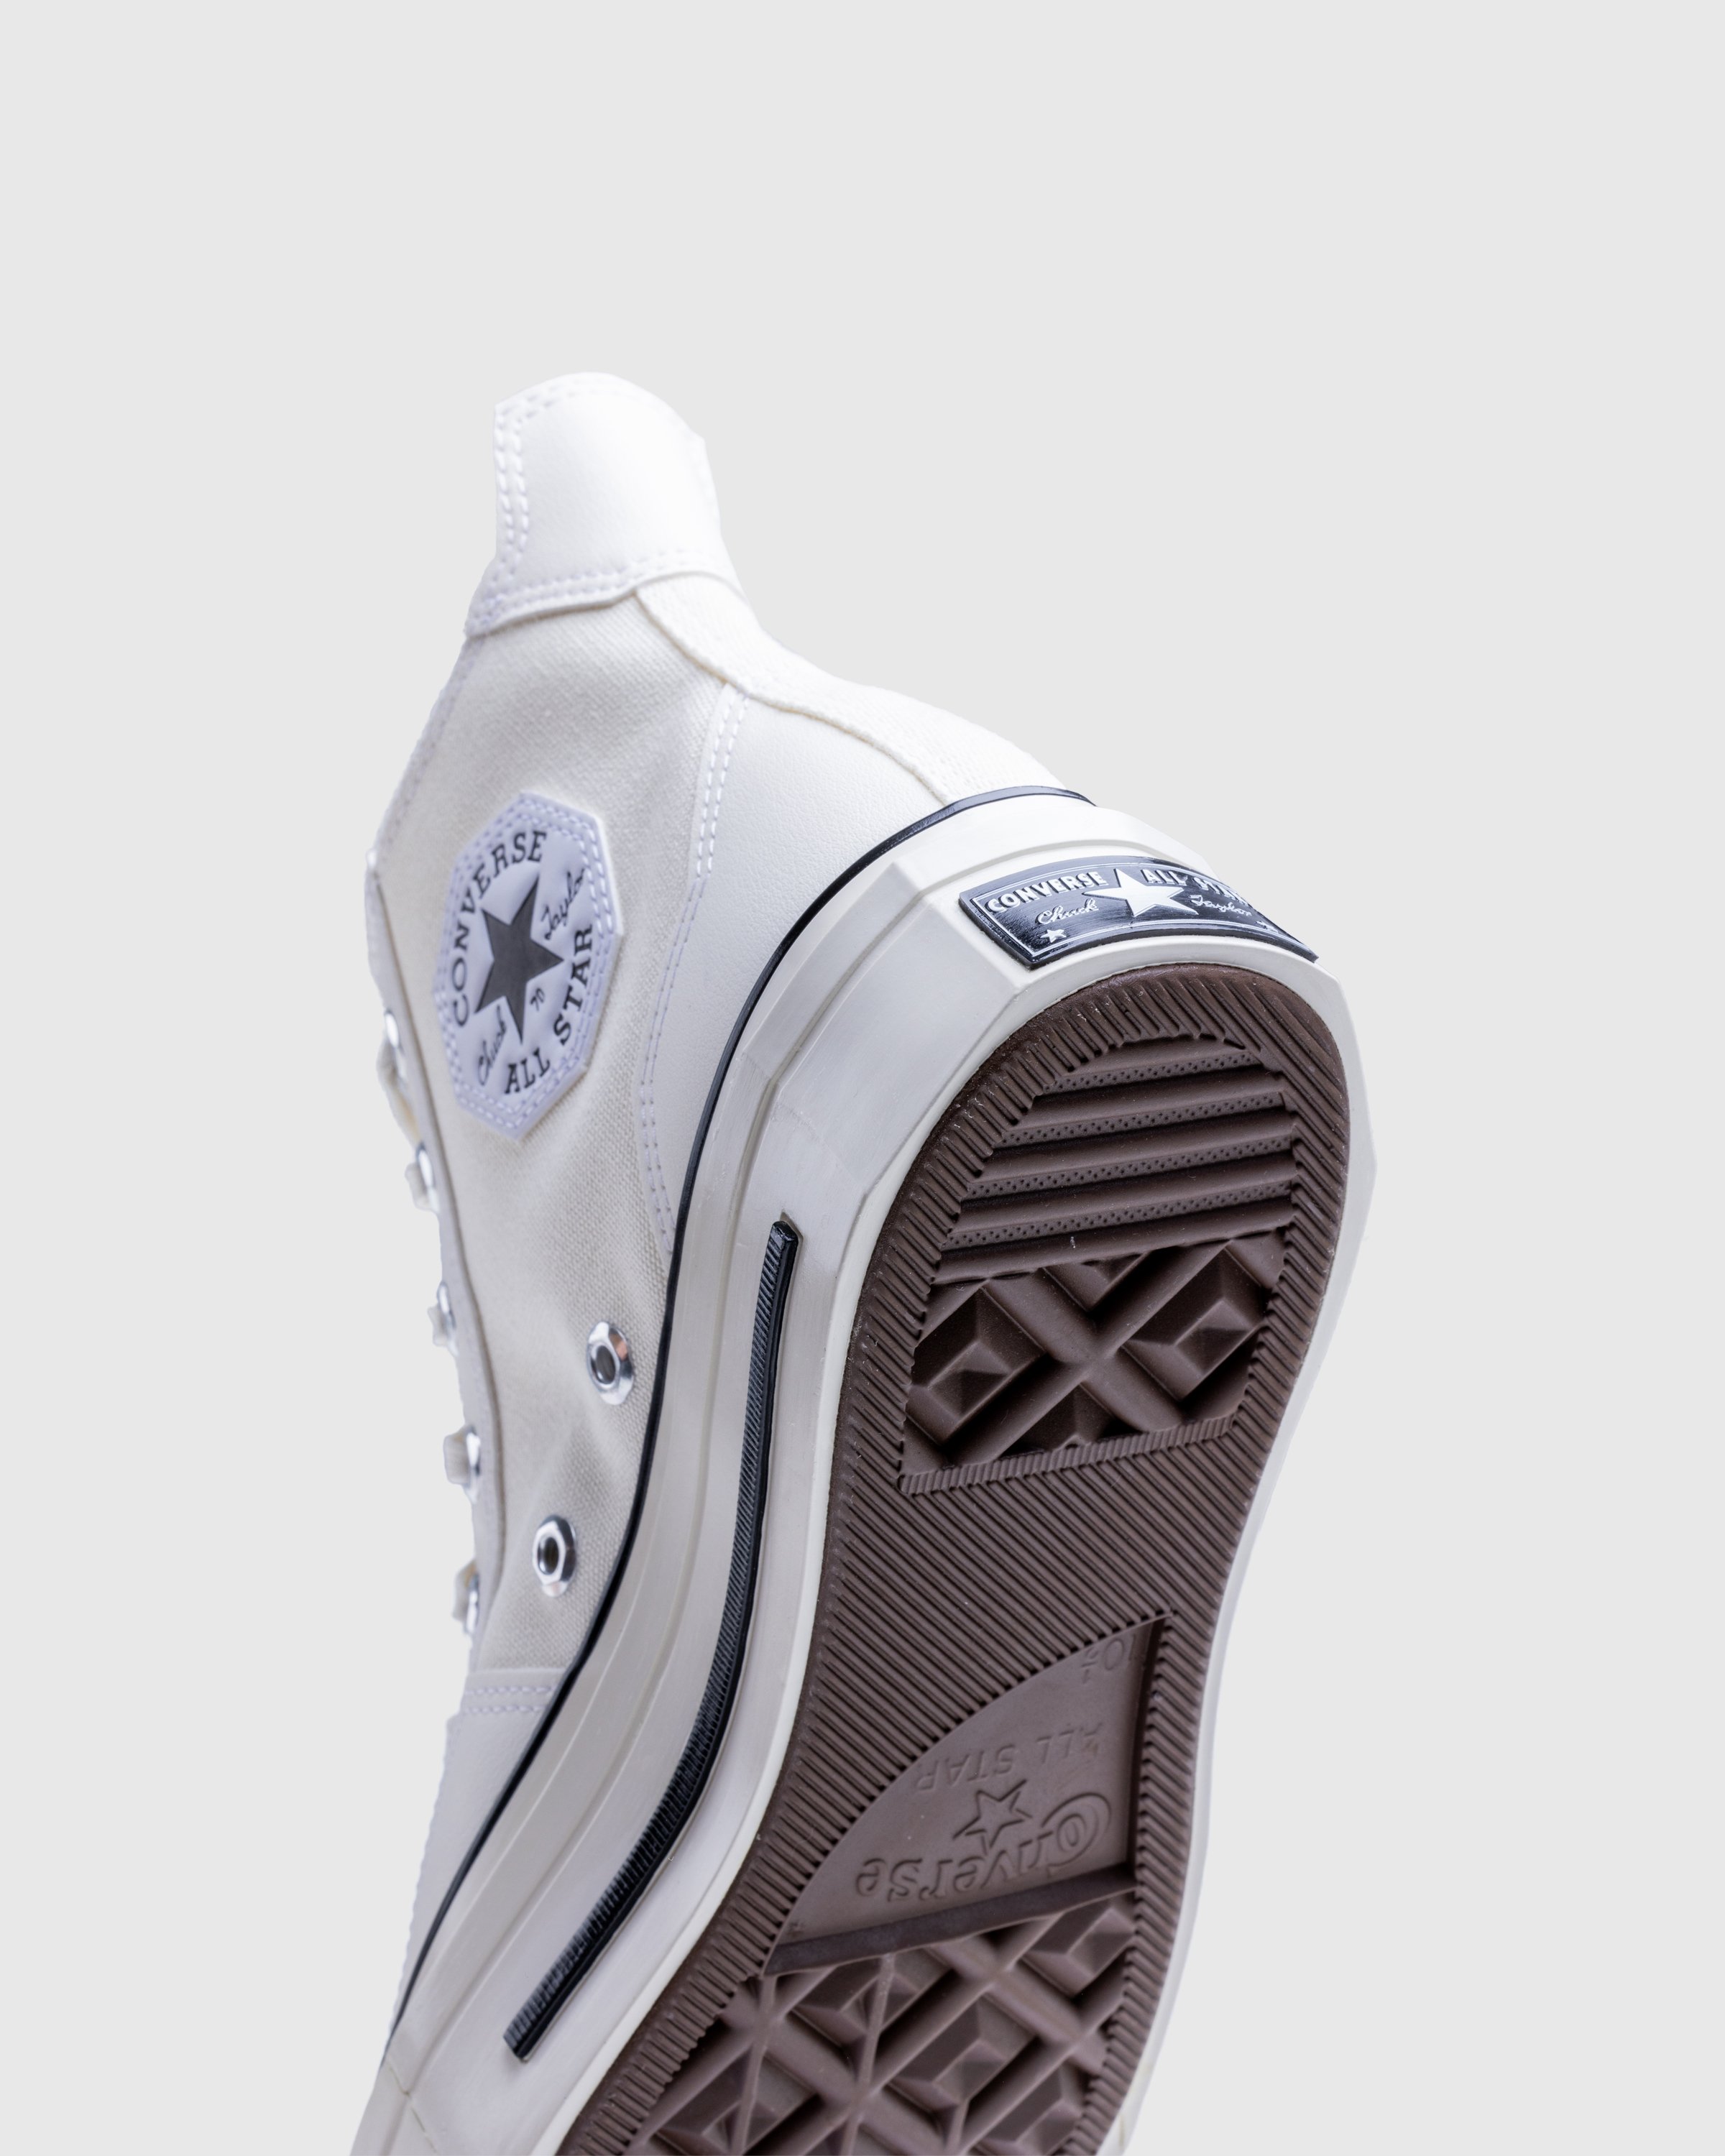 Converse - CHUCK 70 DE LUXE SQUARED HI EGRET/BLACK - Footwear - White - Image 6